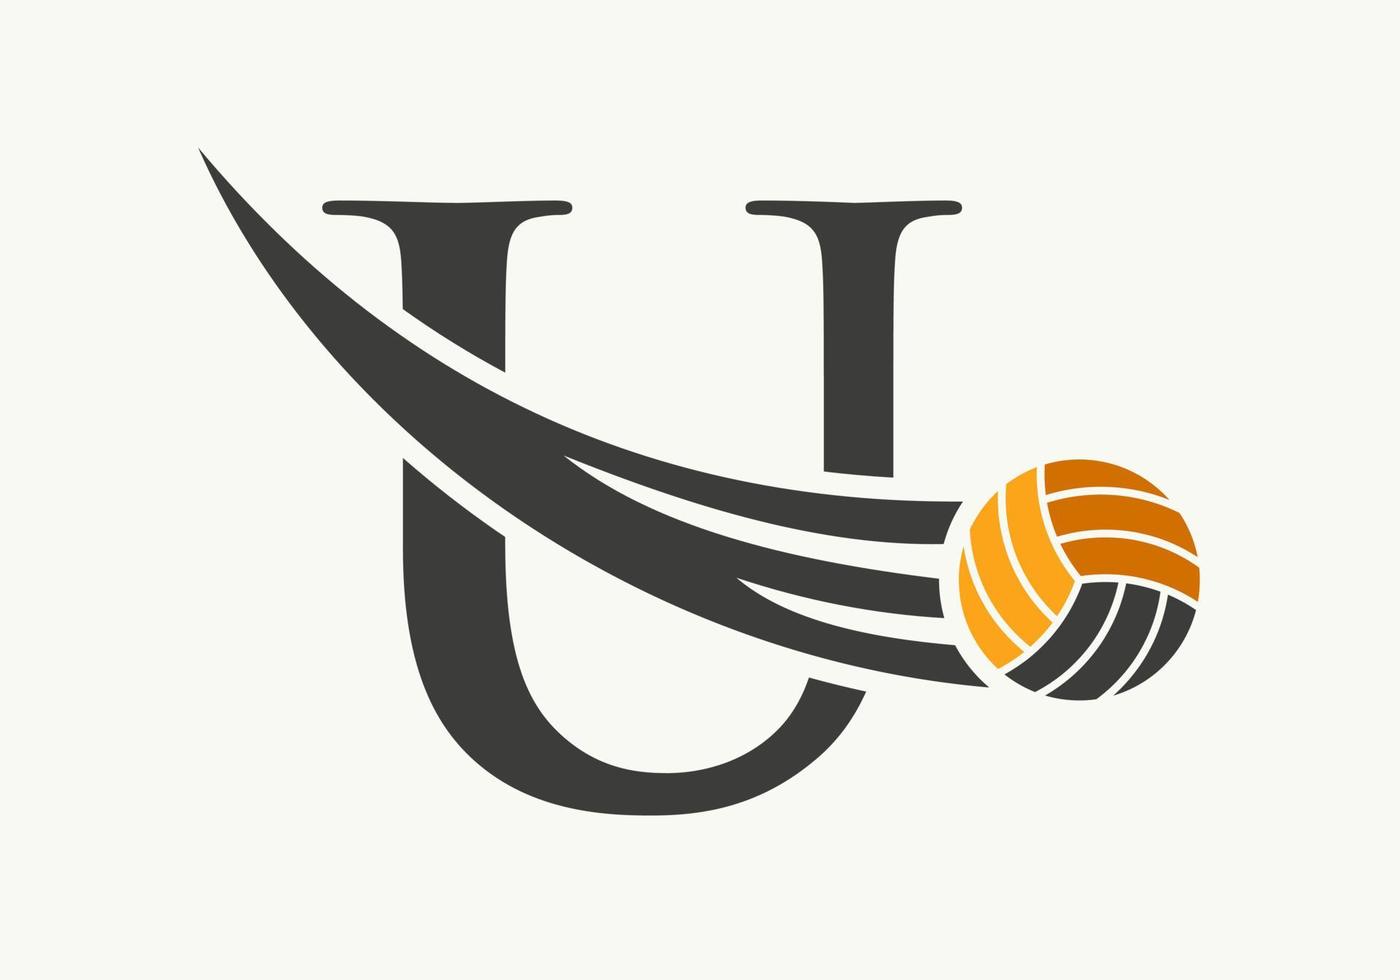 brev u volleyboll logotyp design tecken. volleyboll sporter logotyp symbol vektor mall